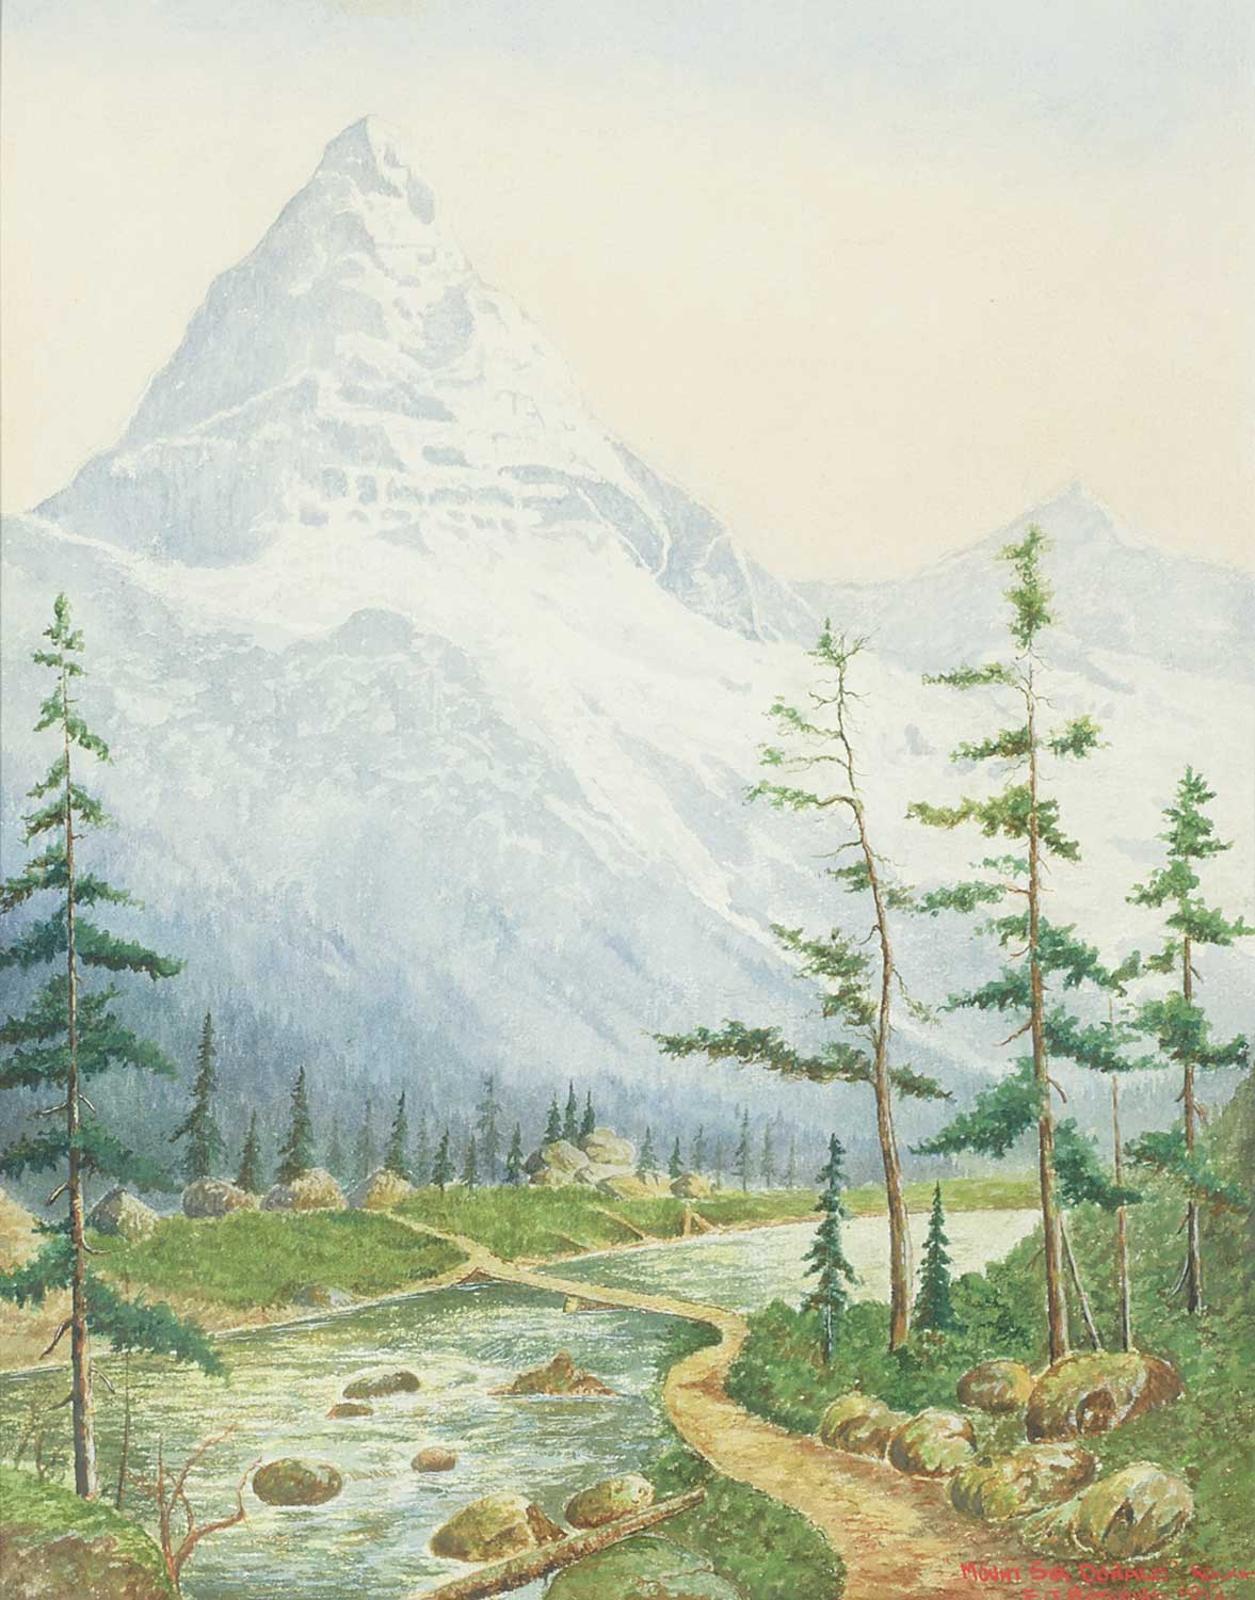 Ernest John Hutchins (1914-1912) - Mount Sir Donald, Rockies